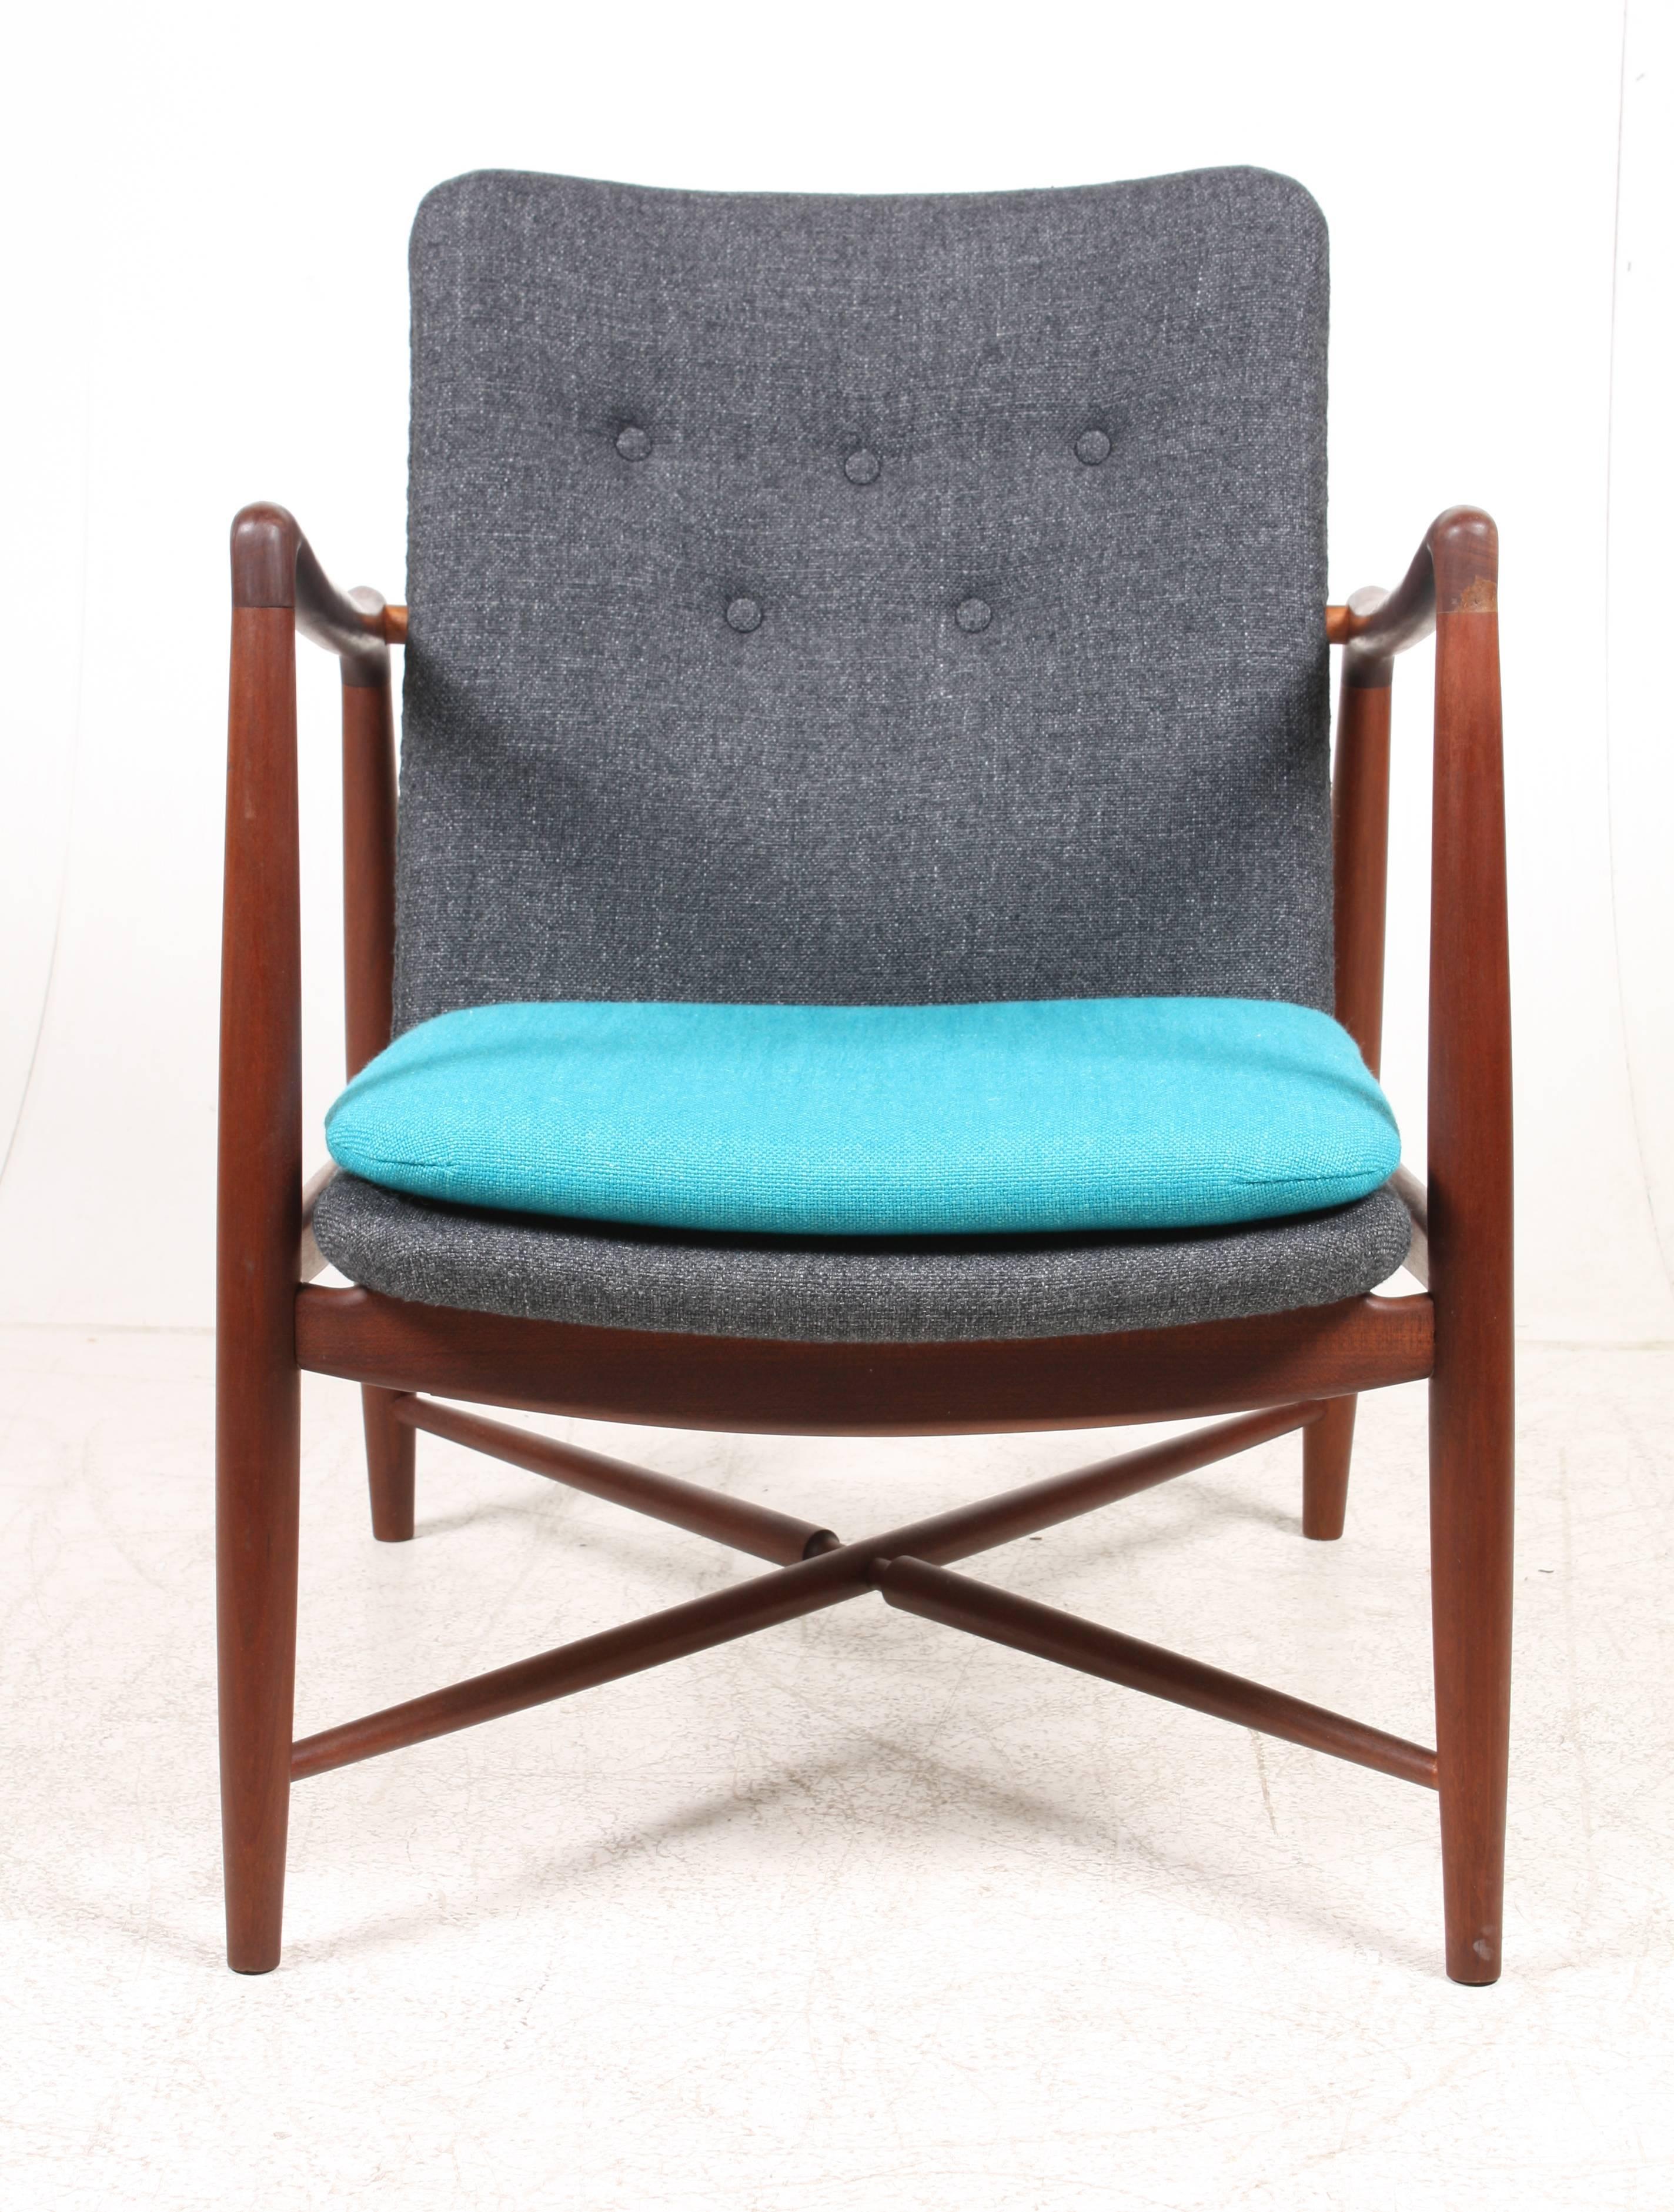 Lounge chair in teak and new fabric, model no. BO59 designed by Finn Juhl for Bovirke cabinet makers, Copenhagen. Made in Denmark. Great condition.